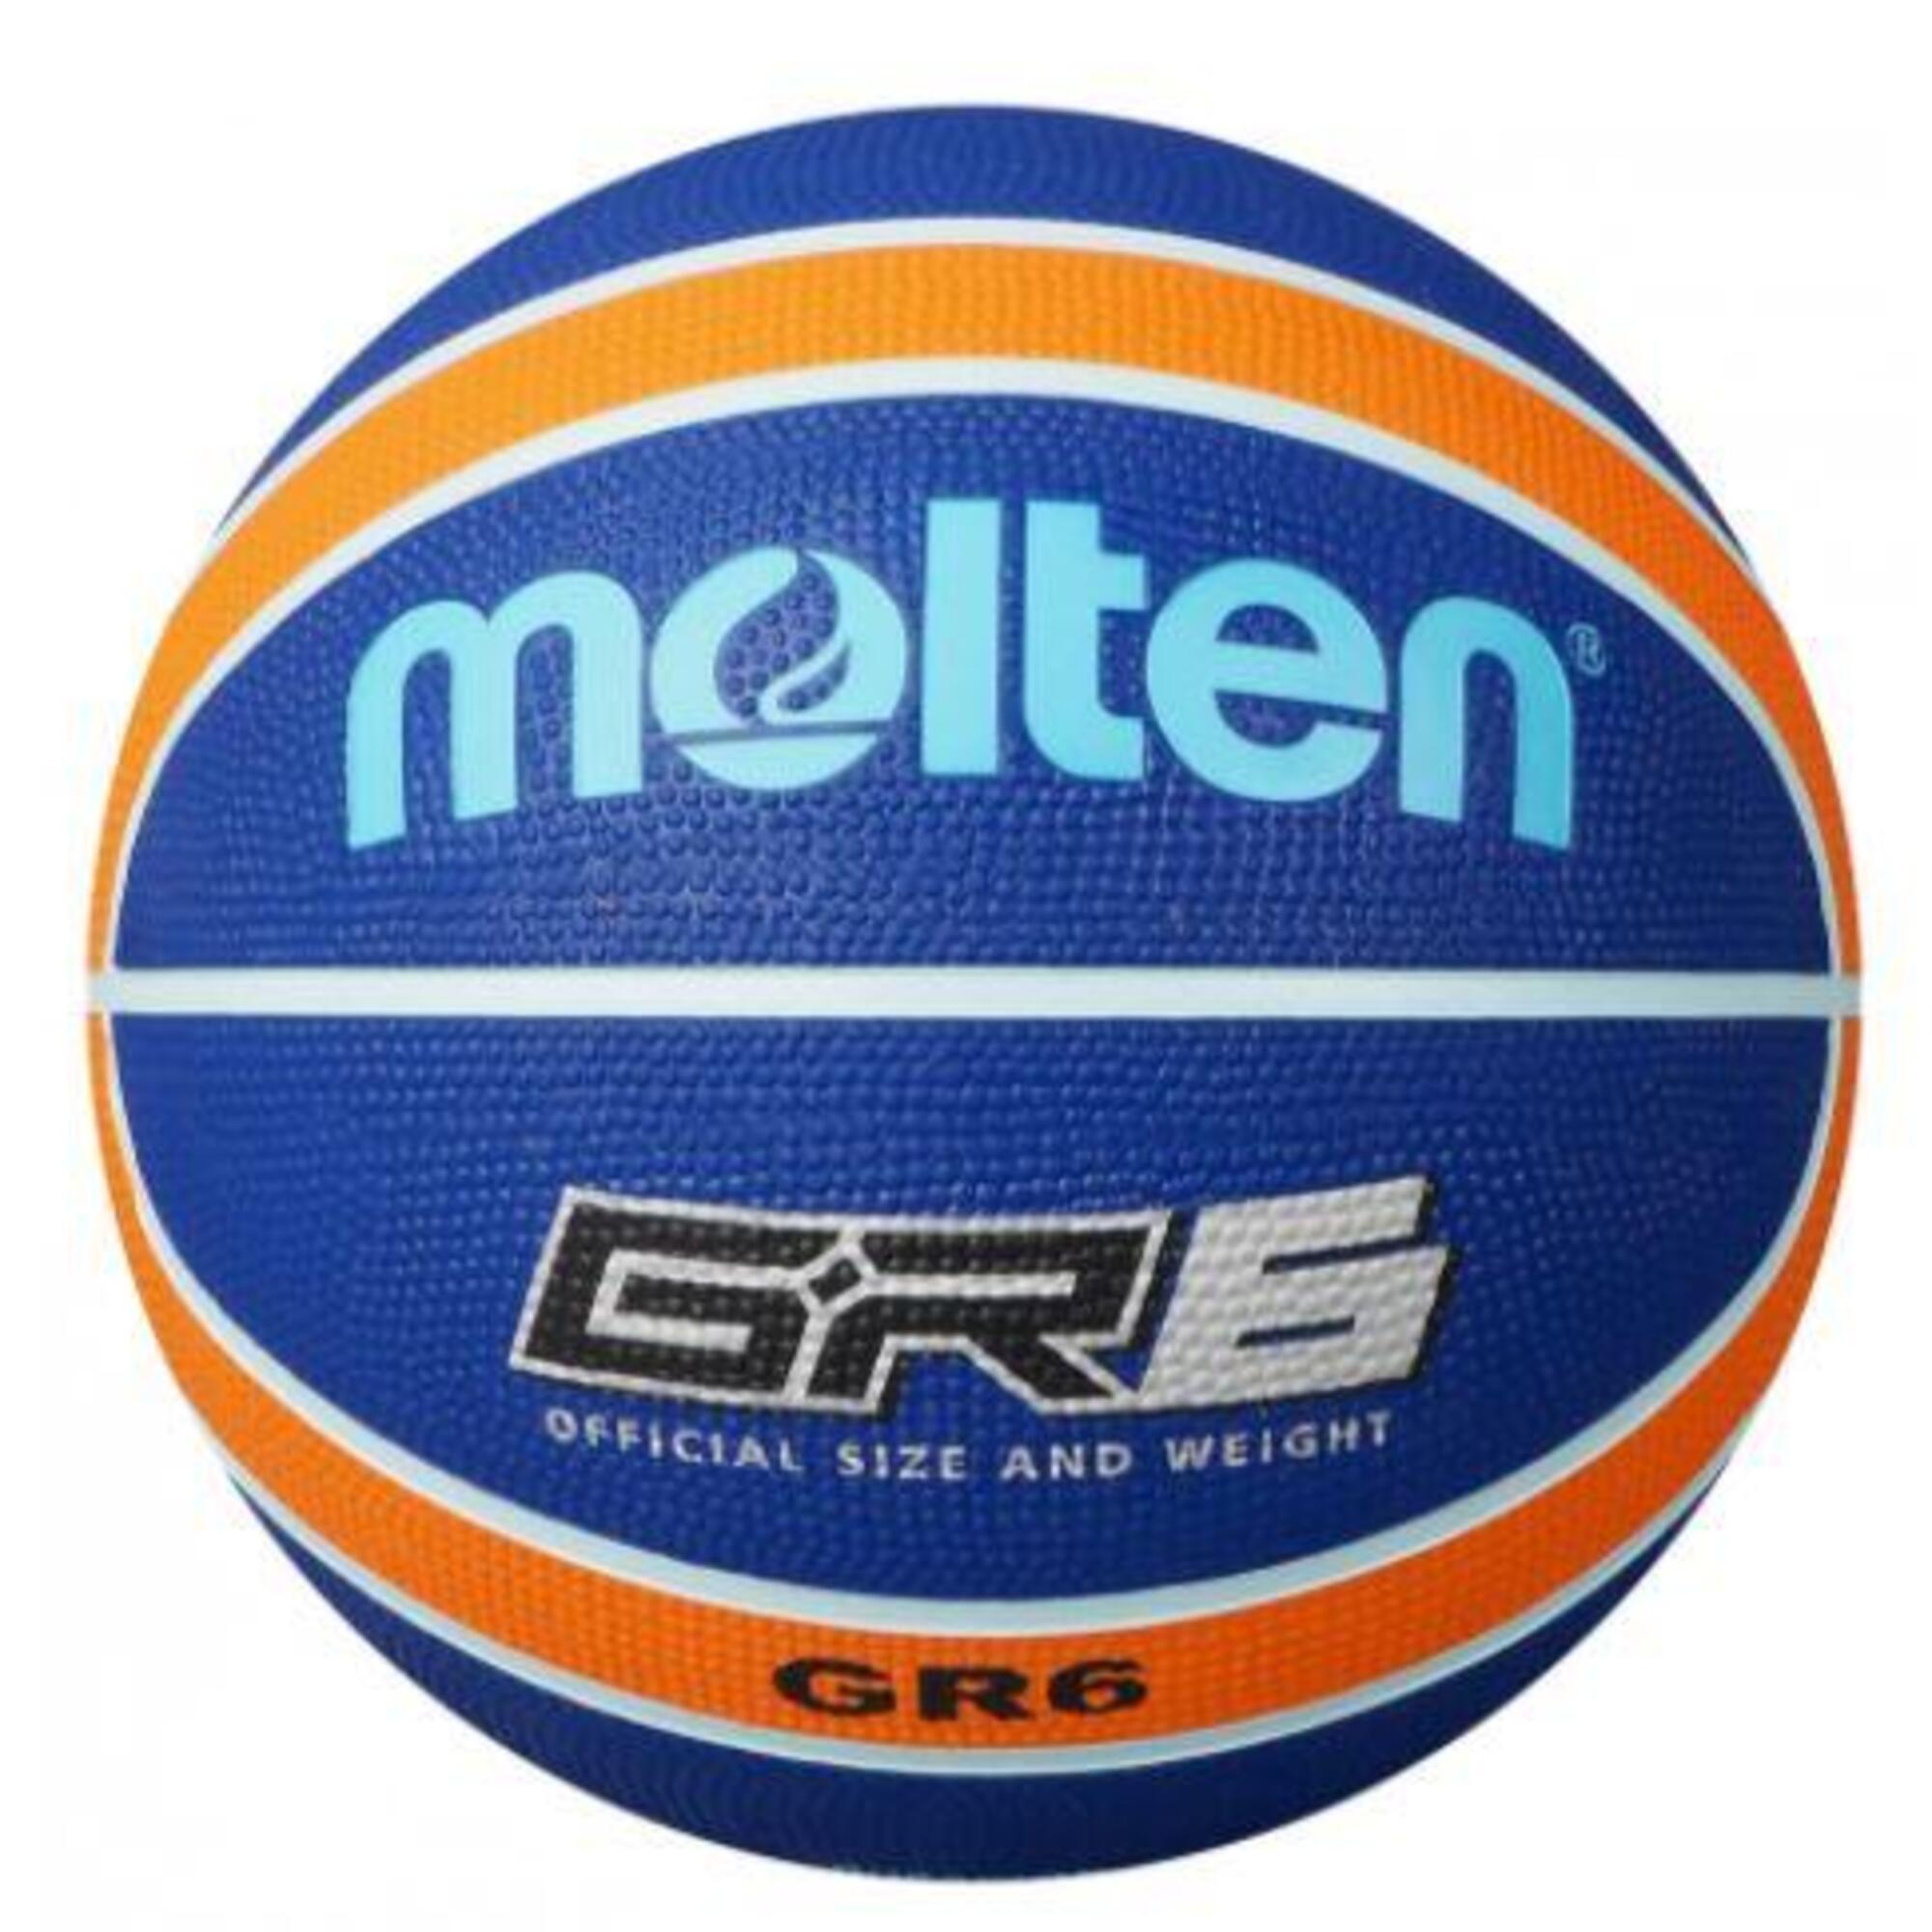 Molten BGR Rubber Basketball - Colour Orange/Blue - Size 6 1/2